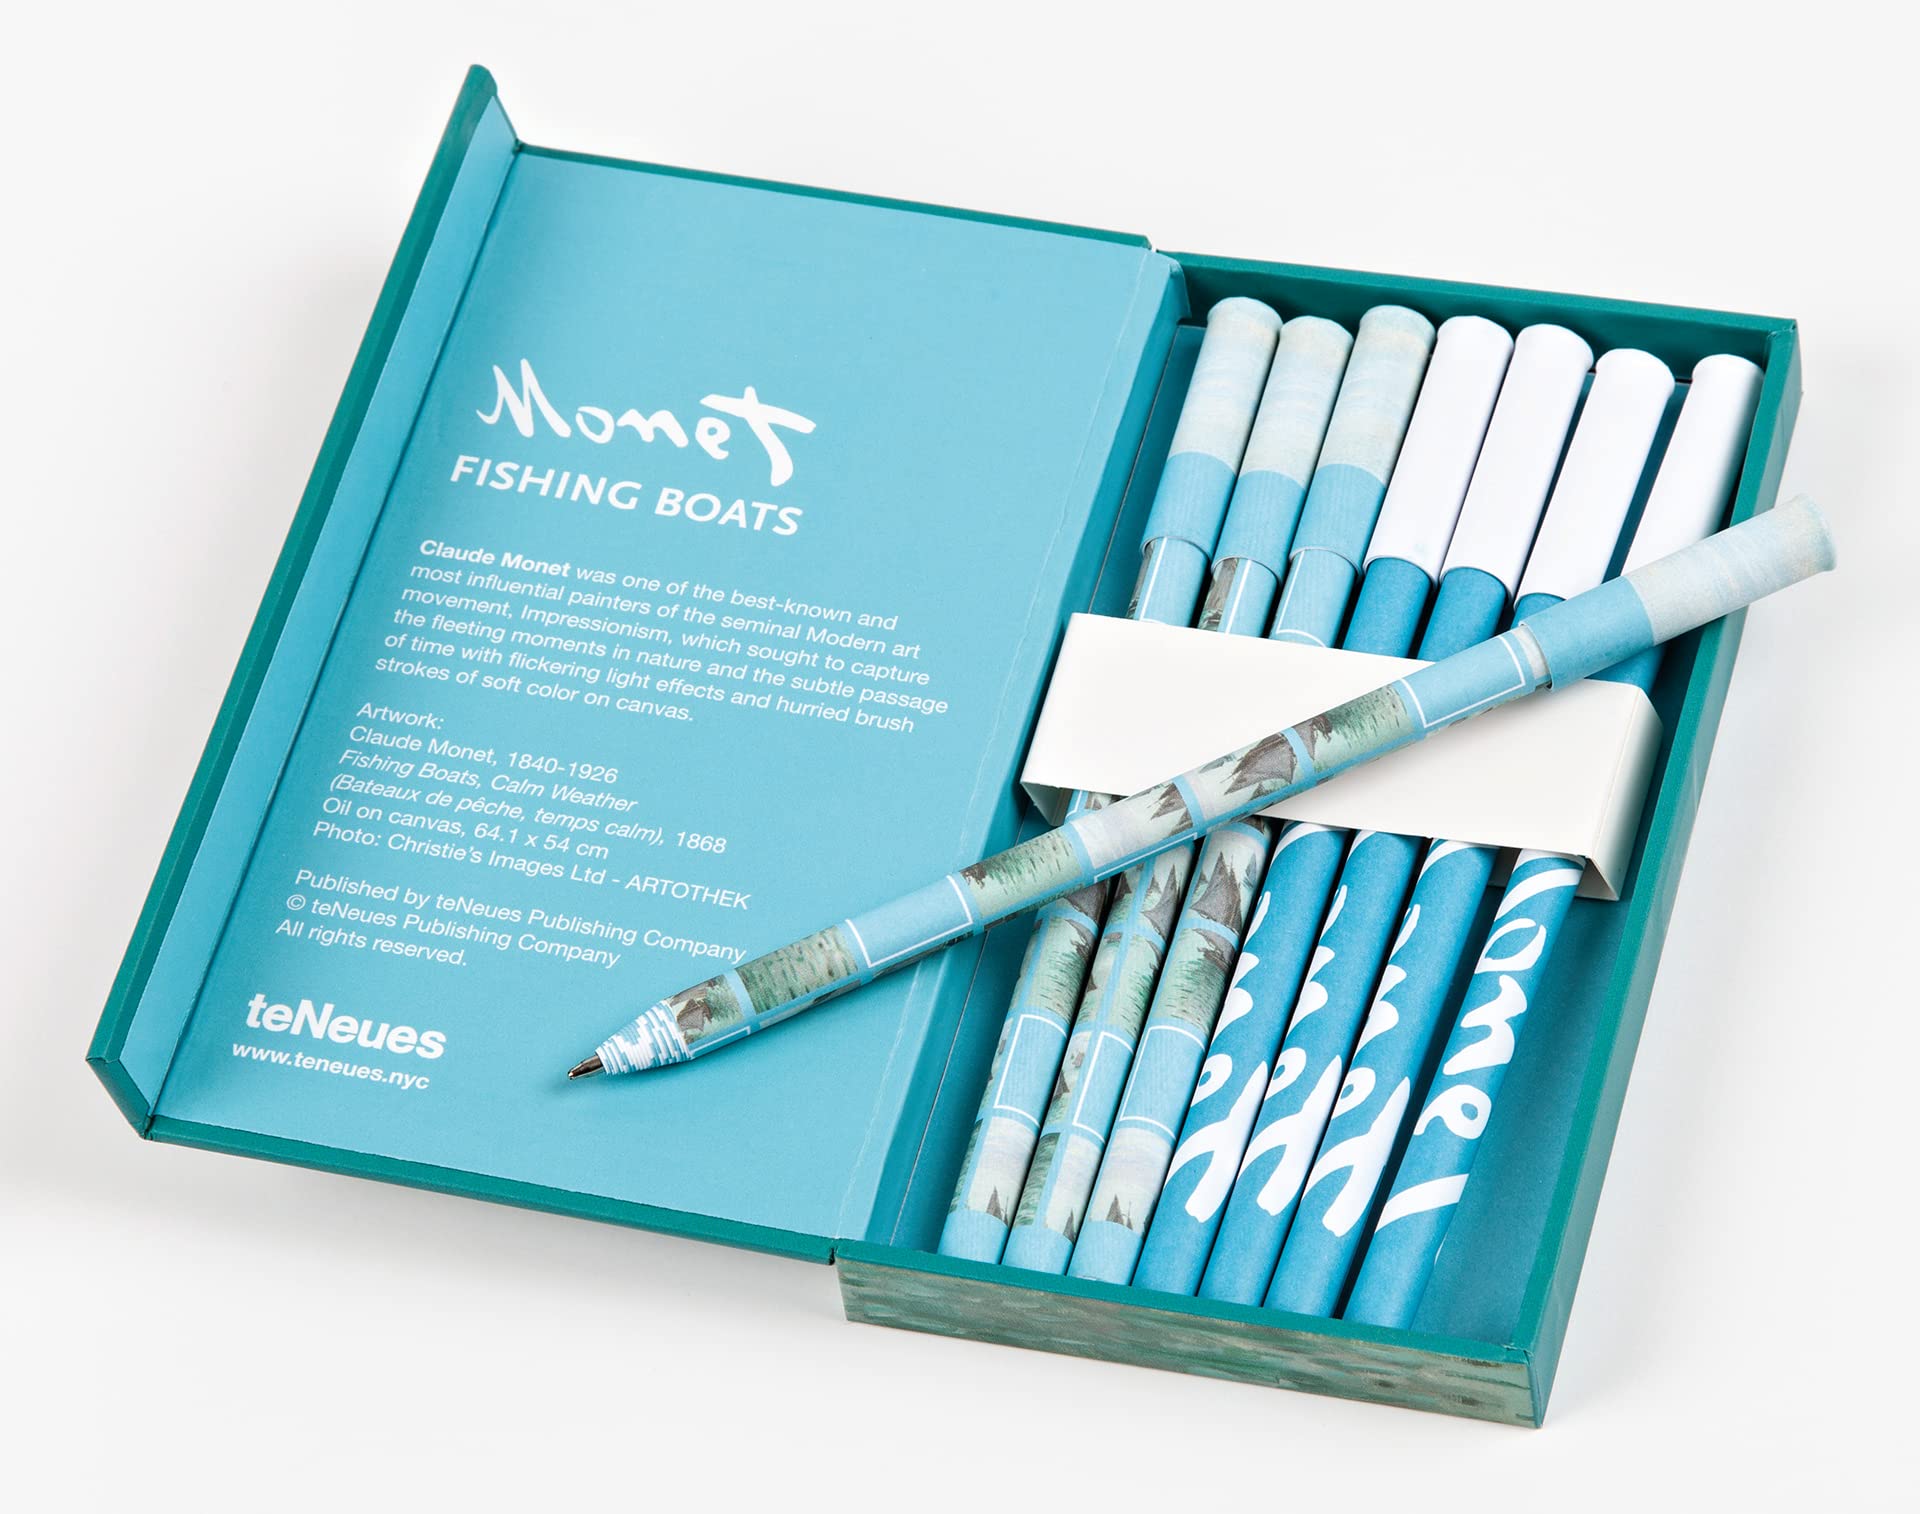 Fishing Boats, Claude Monet 8-Pen Set: Set of 8 Ball Point Pens in a Slim Case